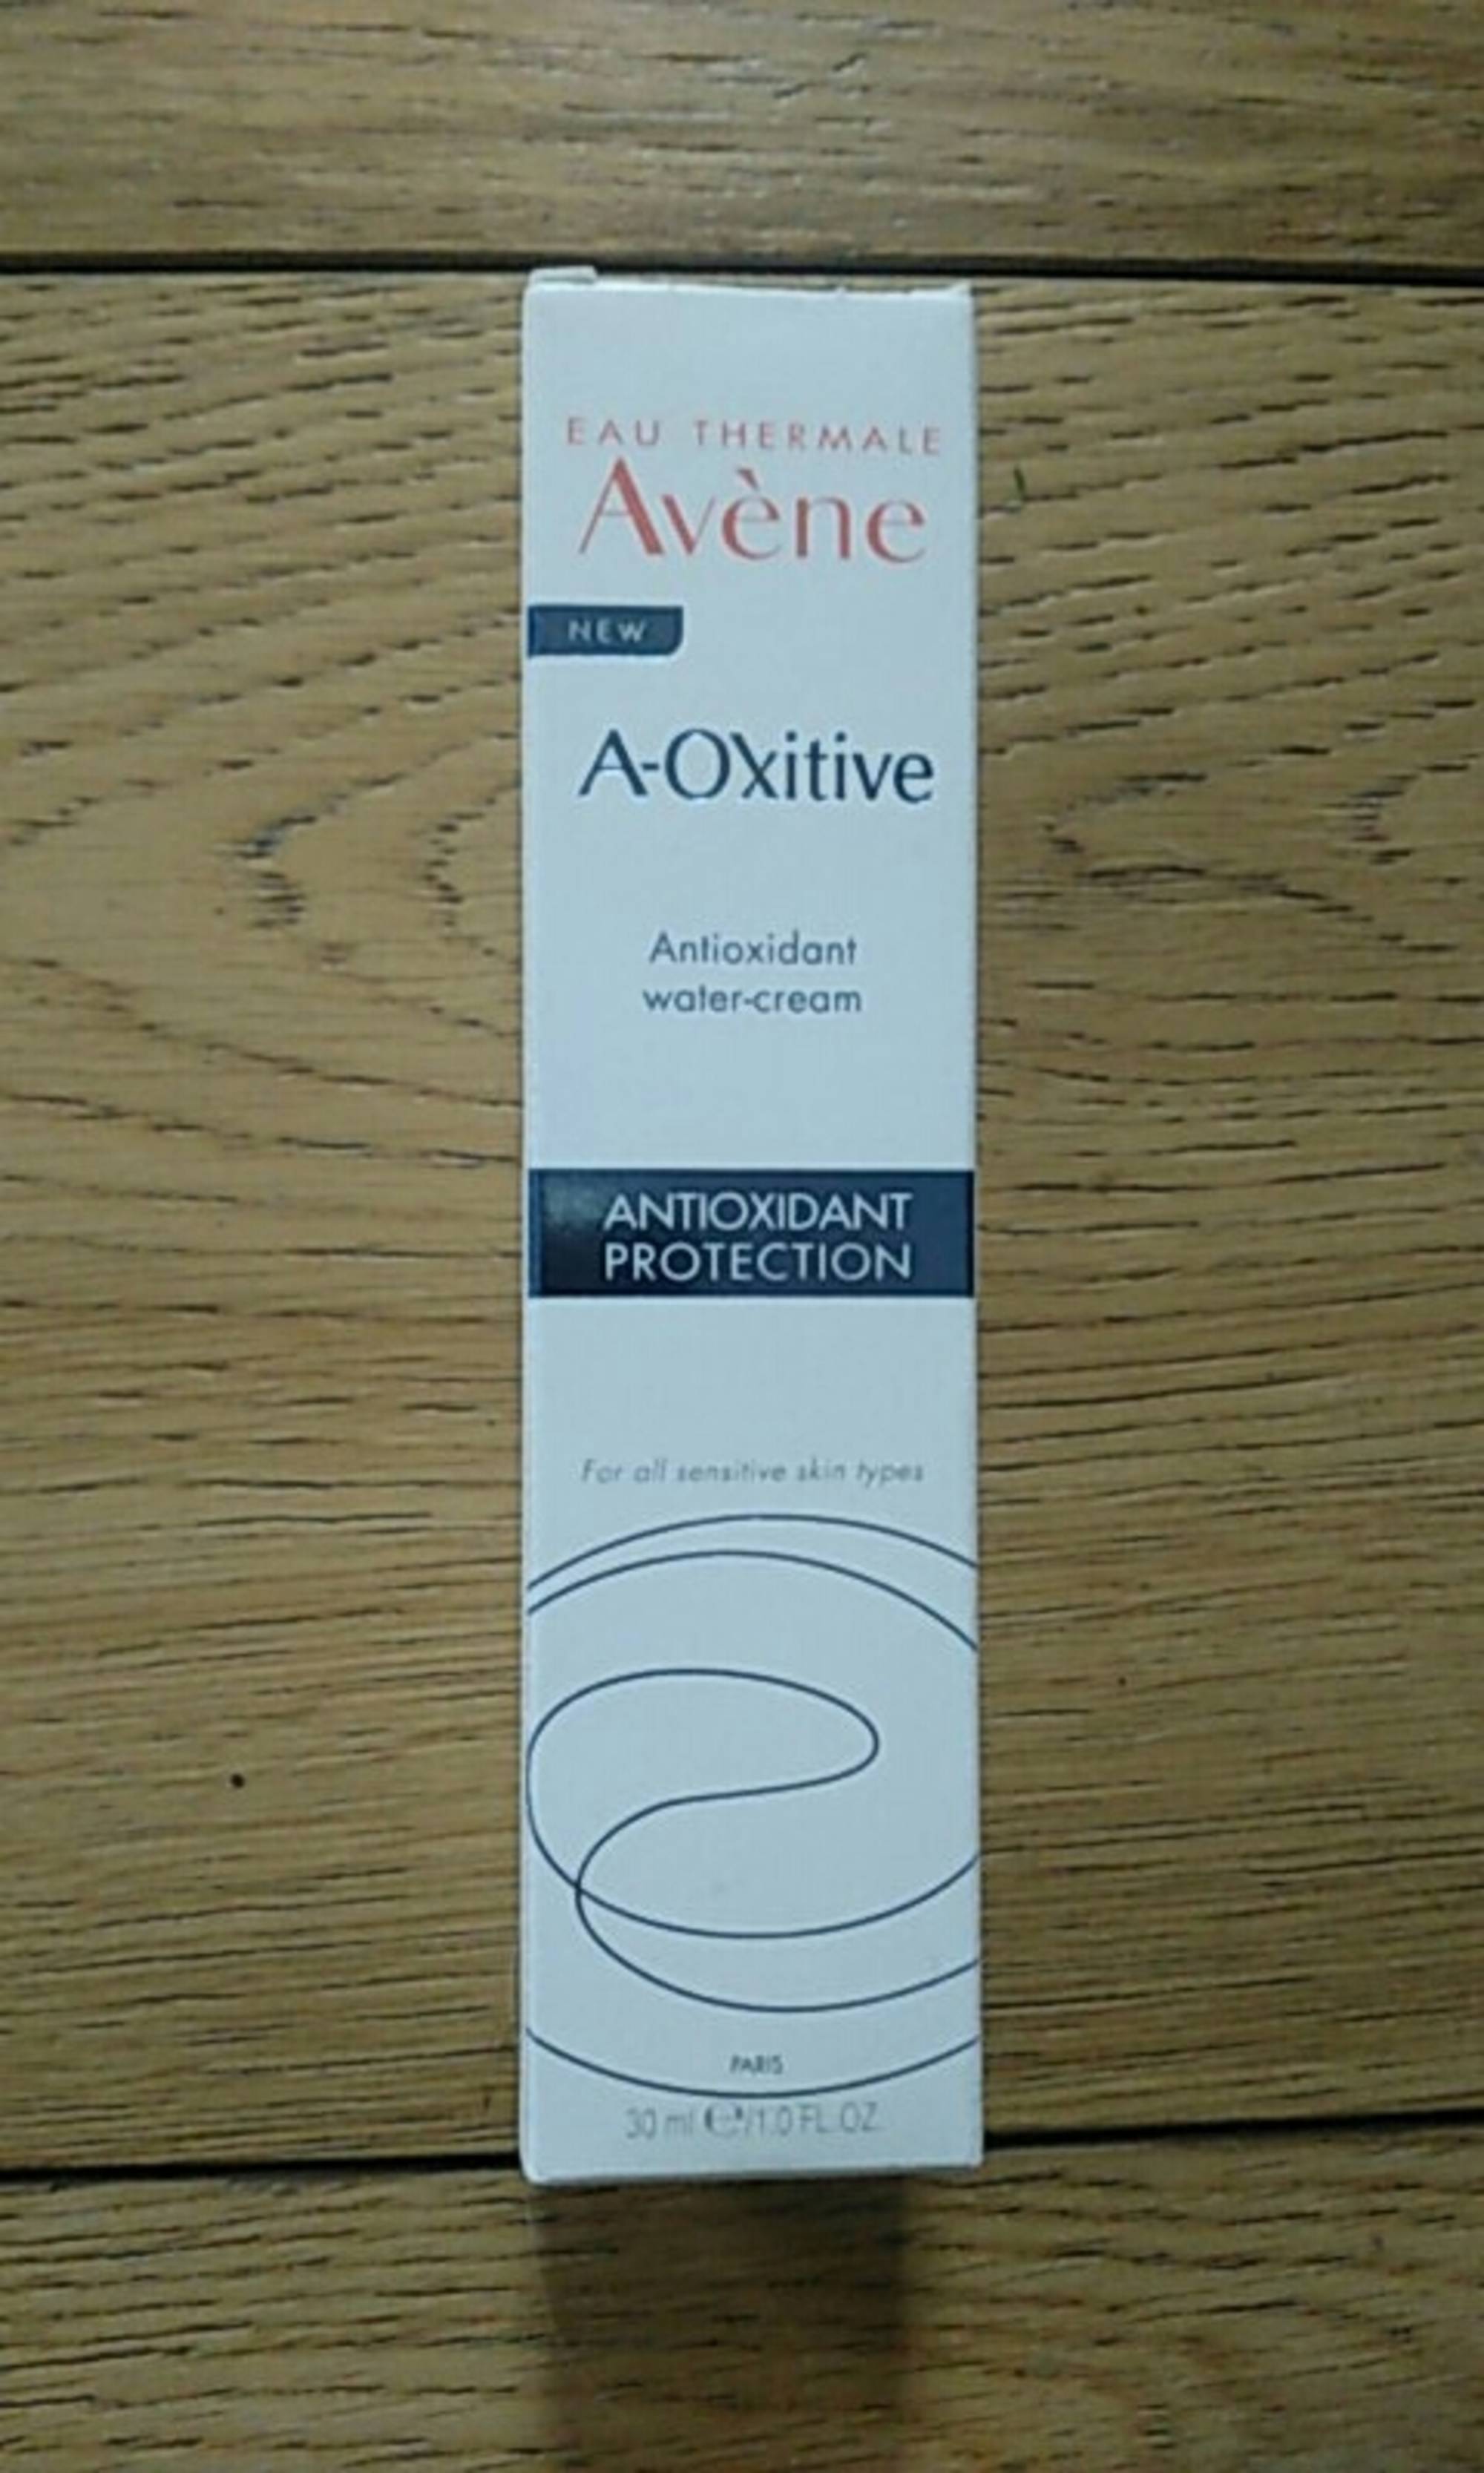 AVÈNE - A-oxitive - Antioxidant water-cream